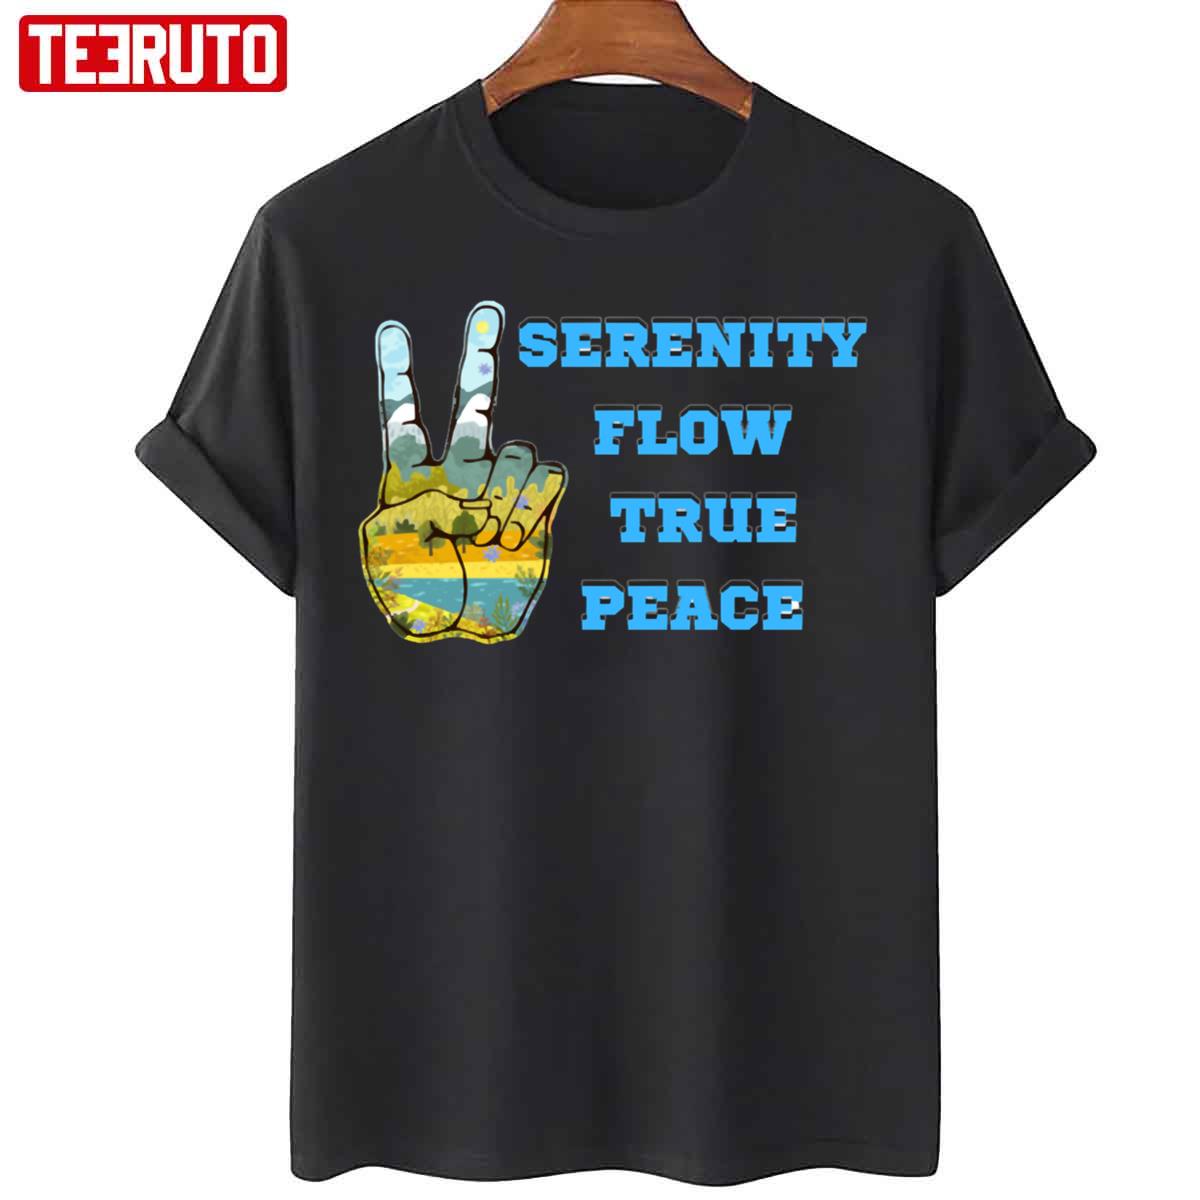 Serenity Flow True Peace And Love Unisex Sweatshirt